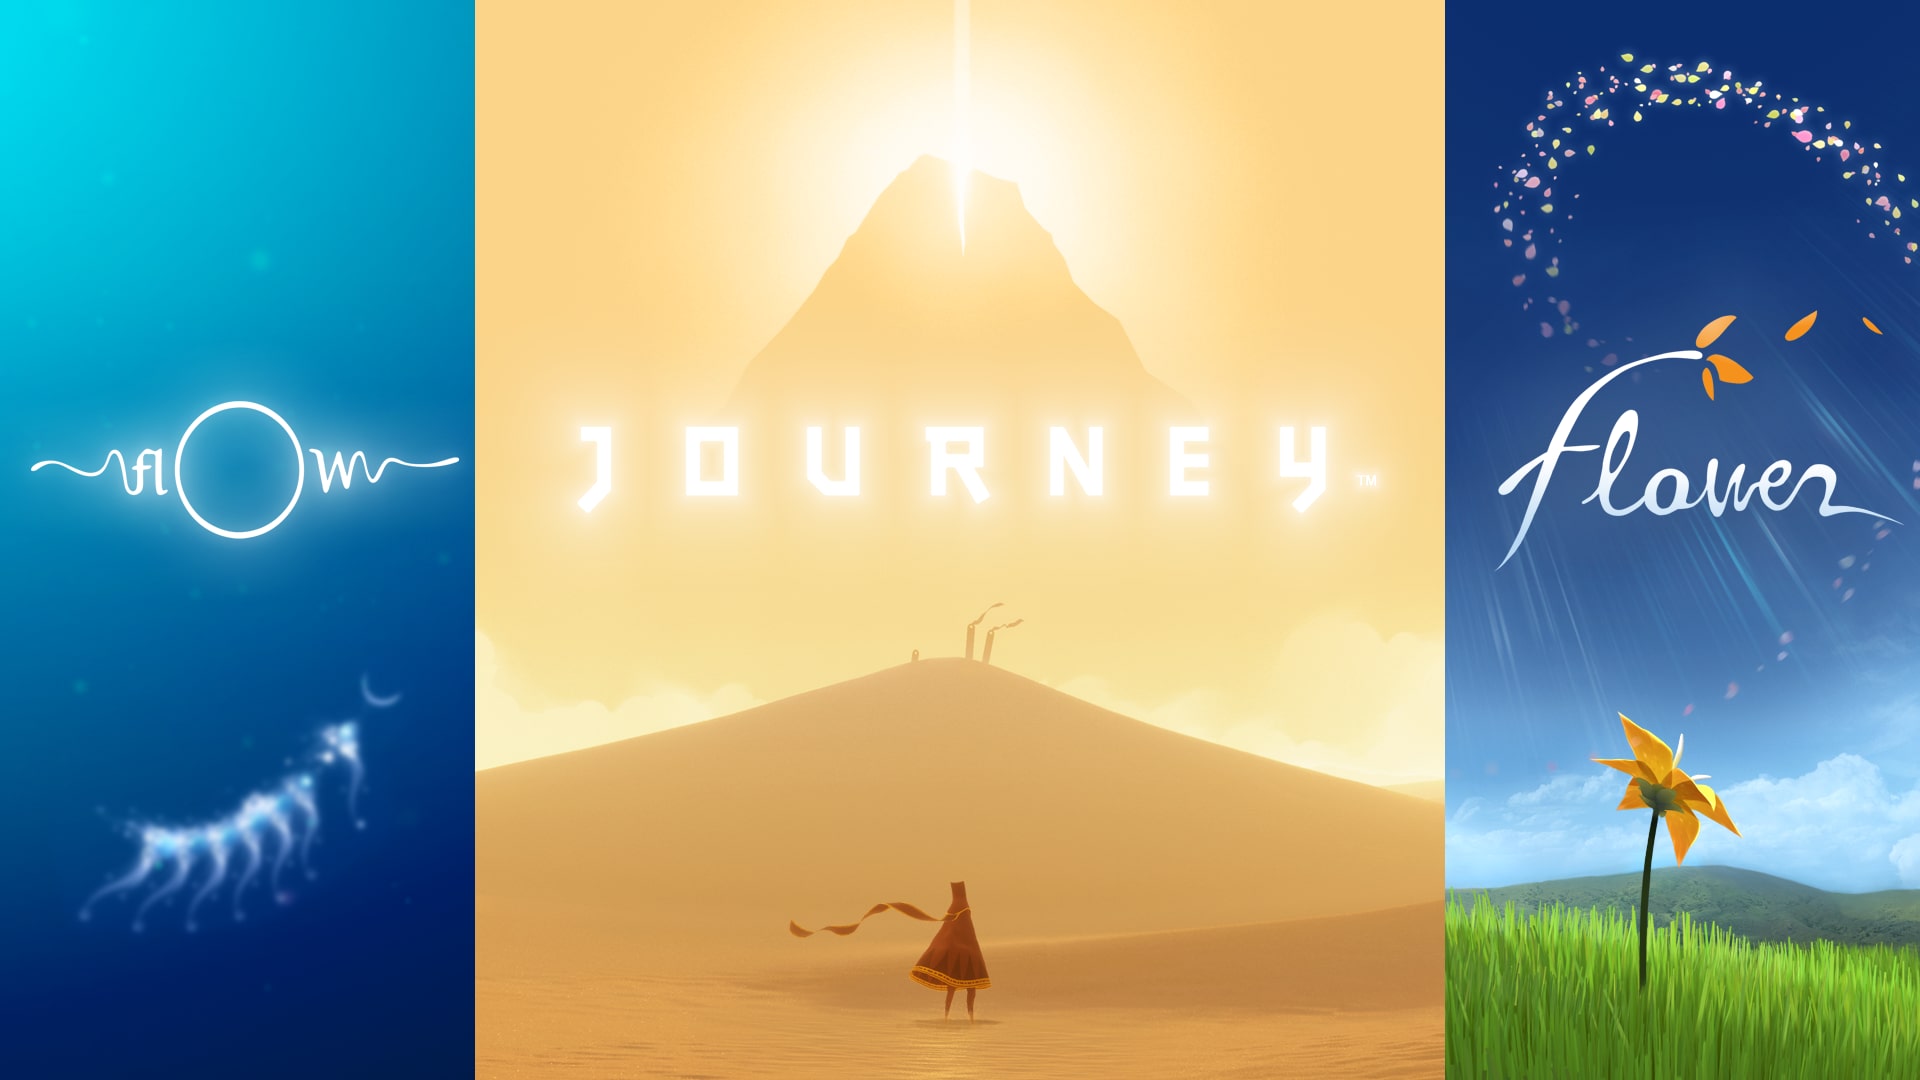 Need journey. Джорни ту зе севич планет. PLAYSTATION 3 Journey Collector's Edition. Voyage Journey trip разница. Success is a Journey not destination.